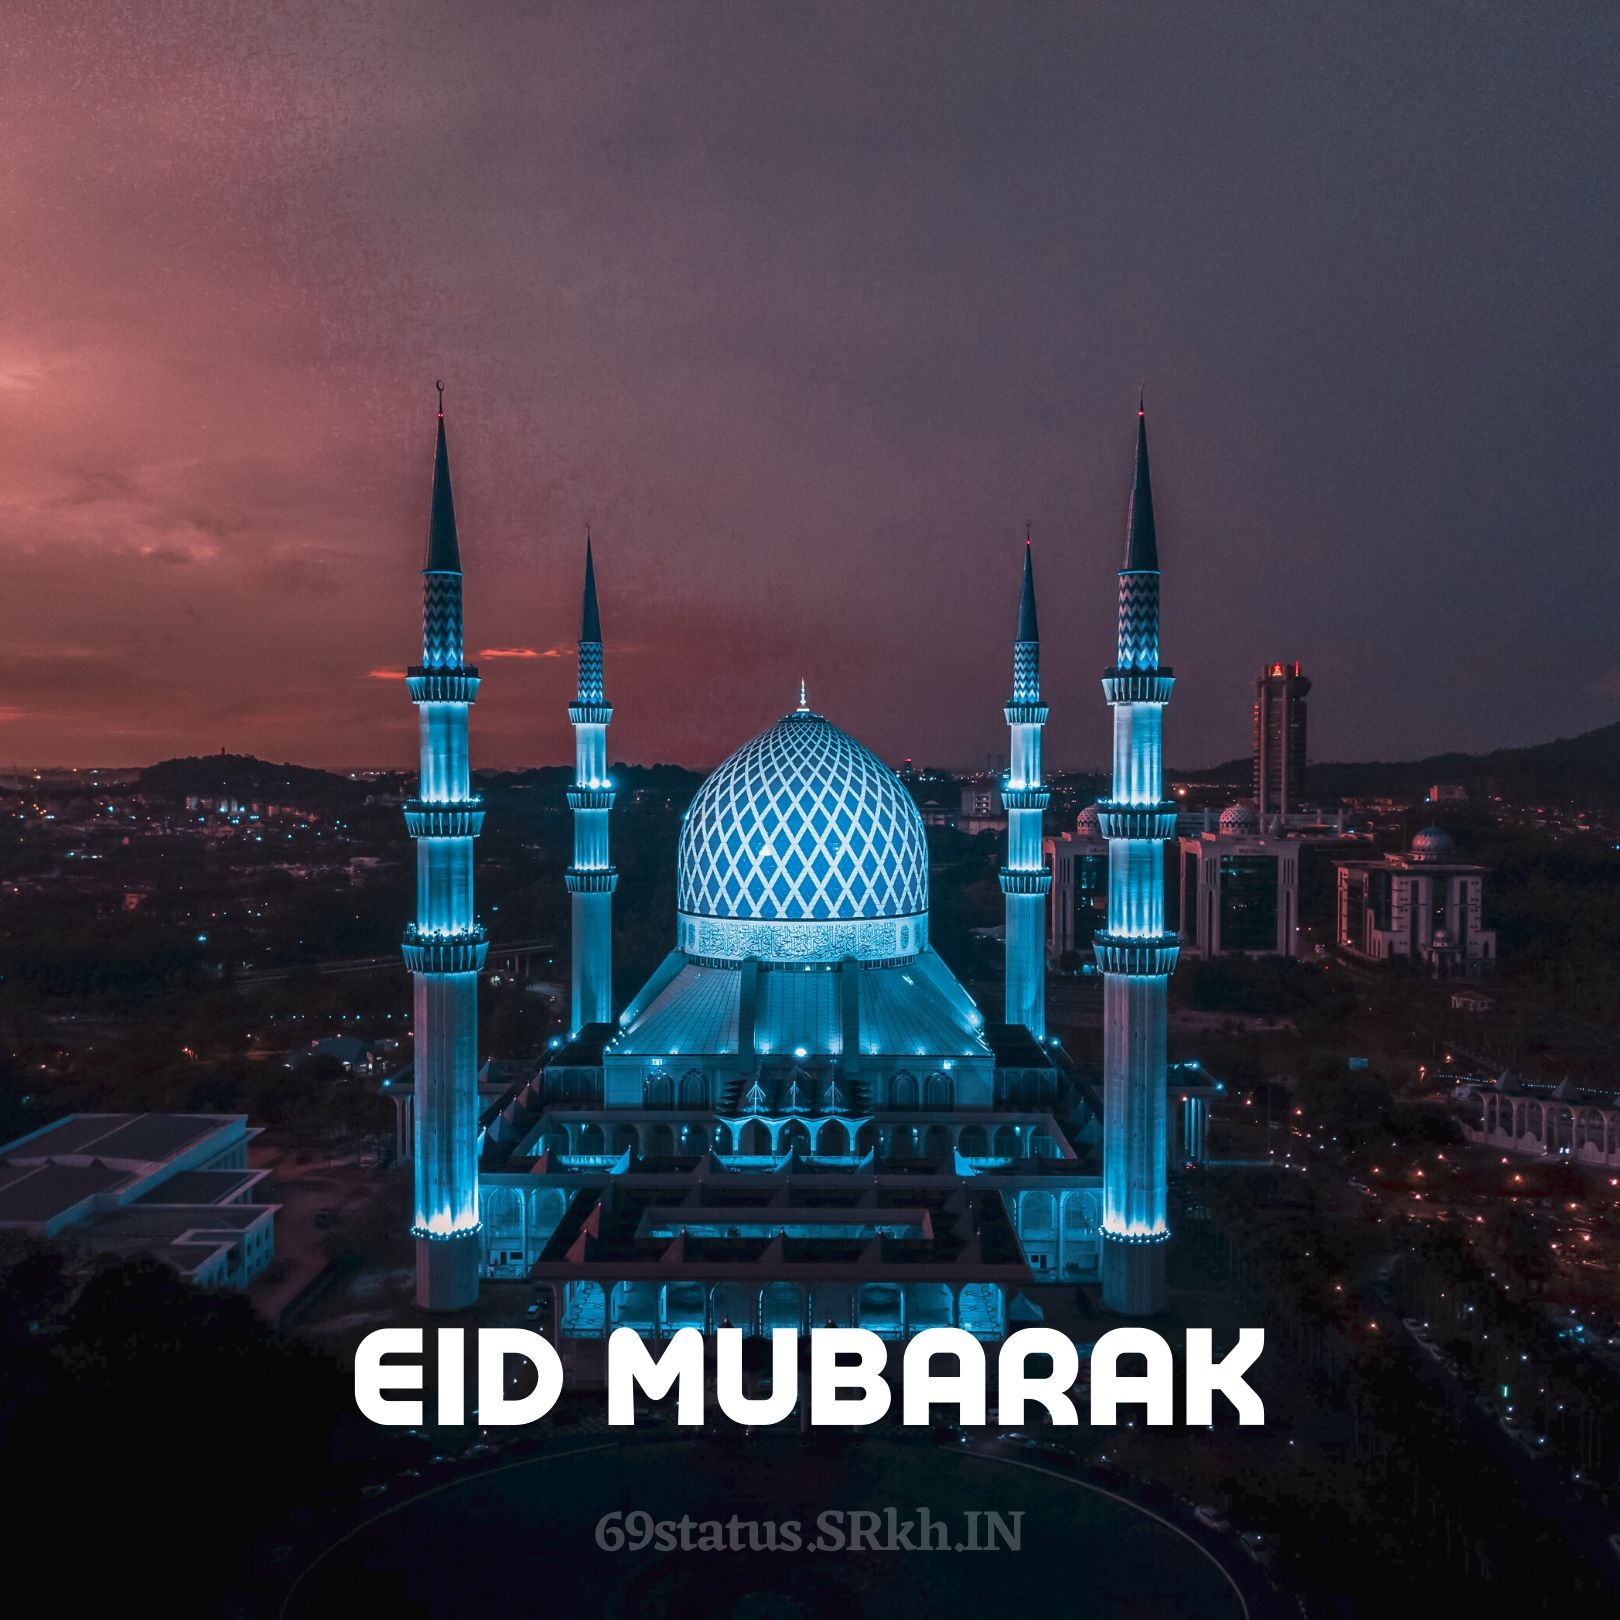 Eid Mubarak beautiful image free download 2